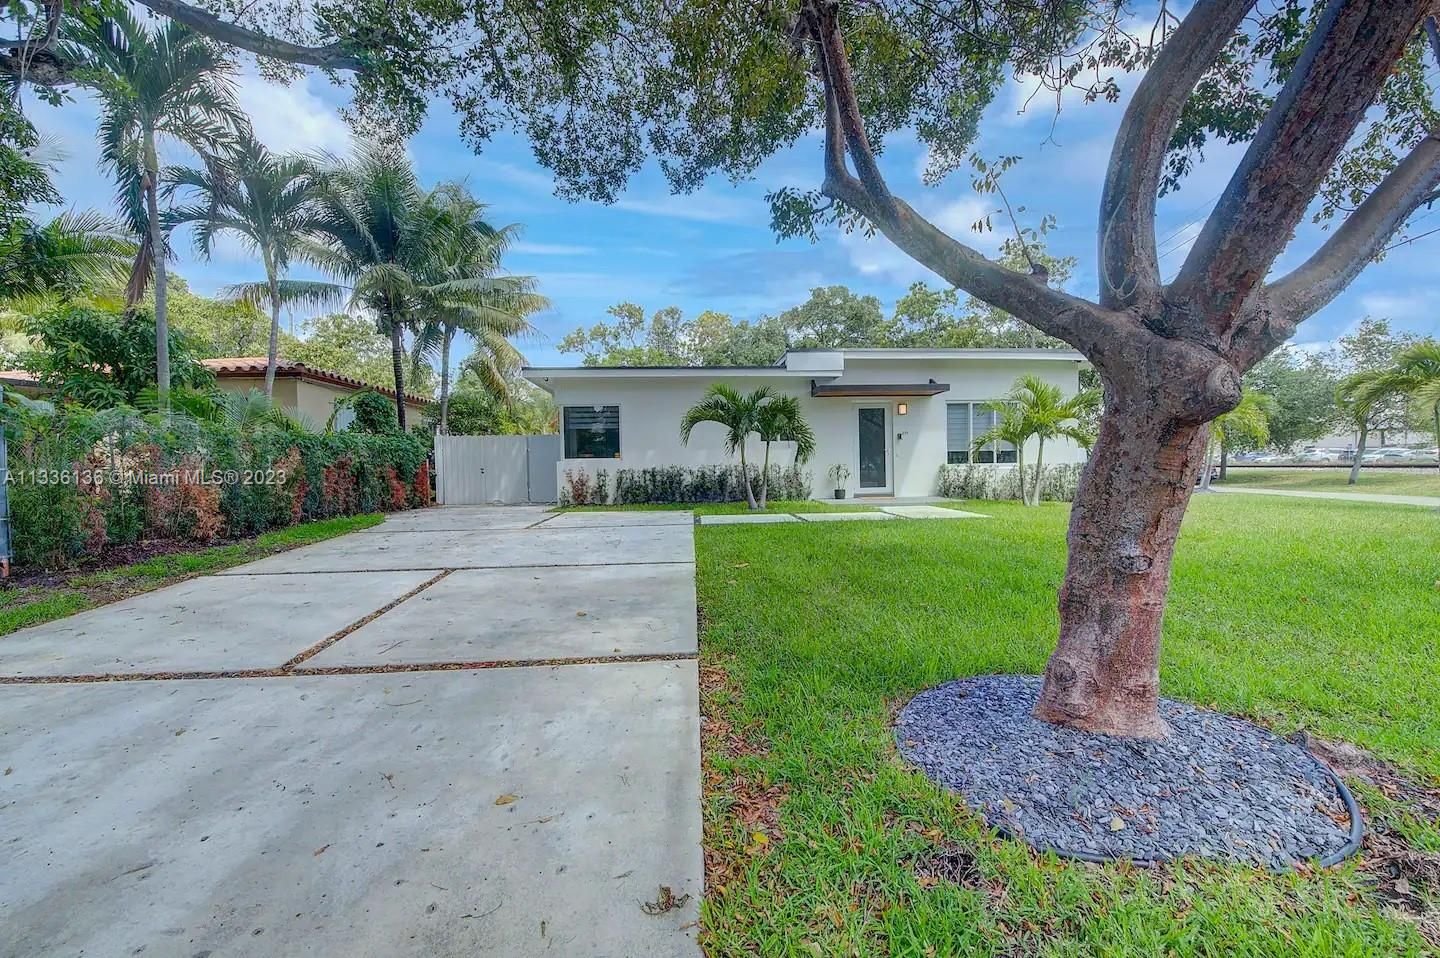 Real estate property located at 291 47th St, Miami-Dade County, Miami, FL